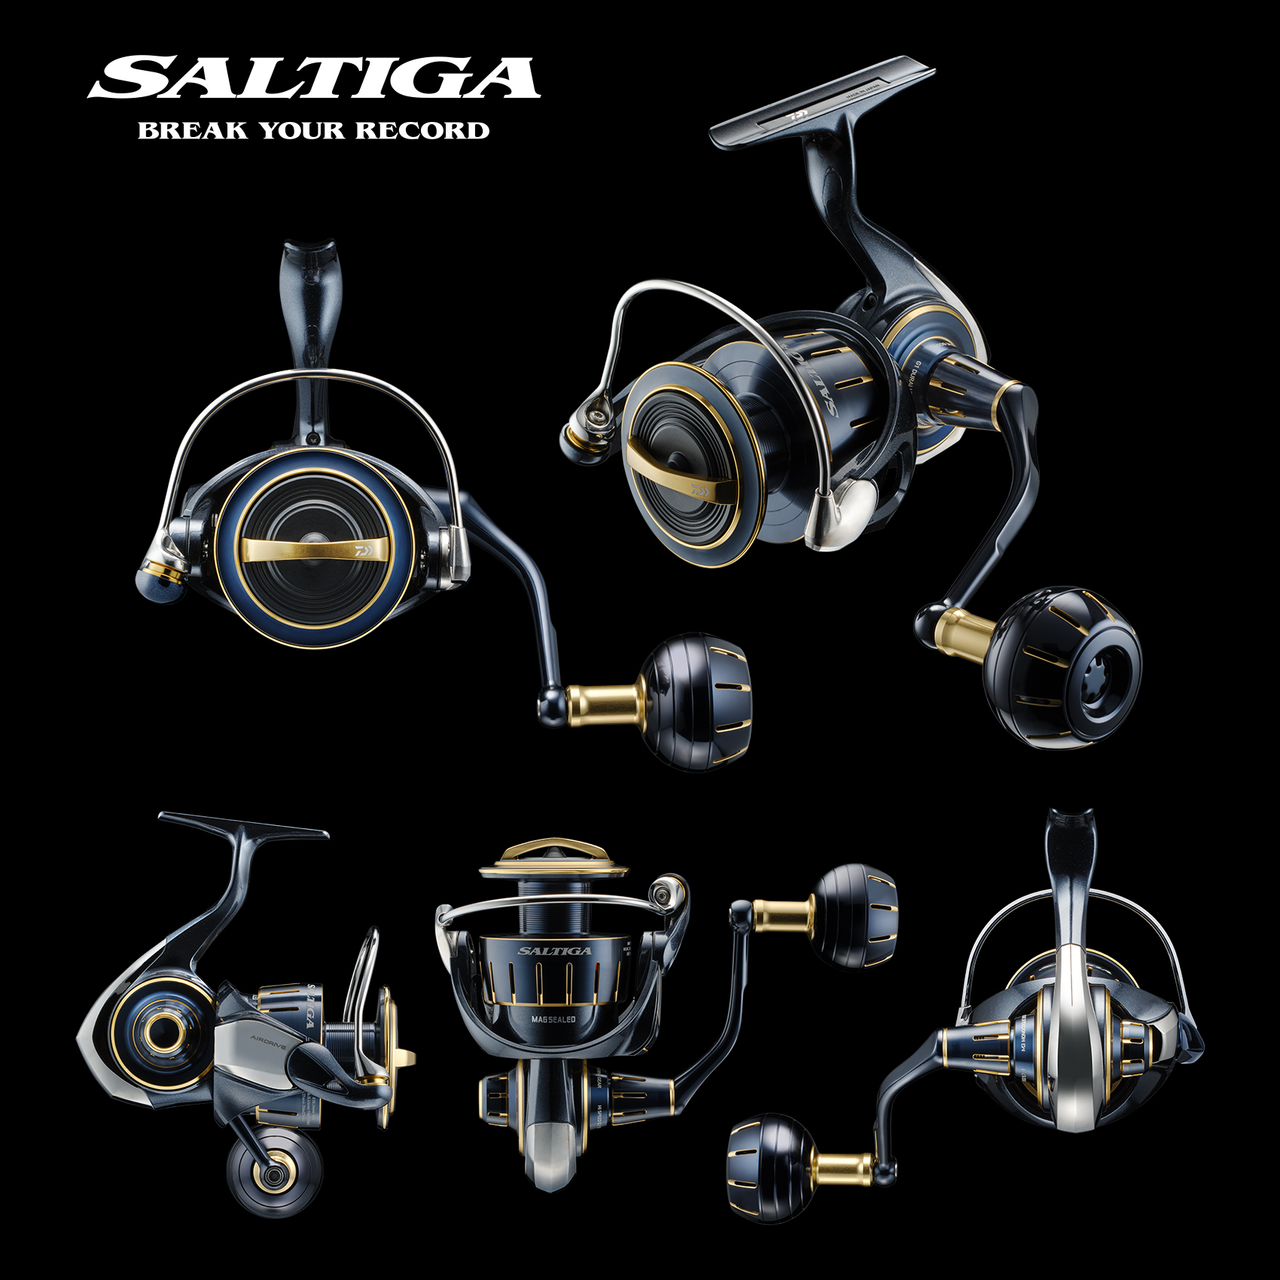 Daiwa Saltiga Spinning Reel